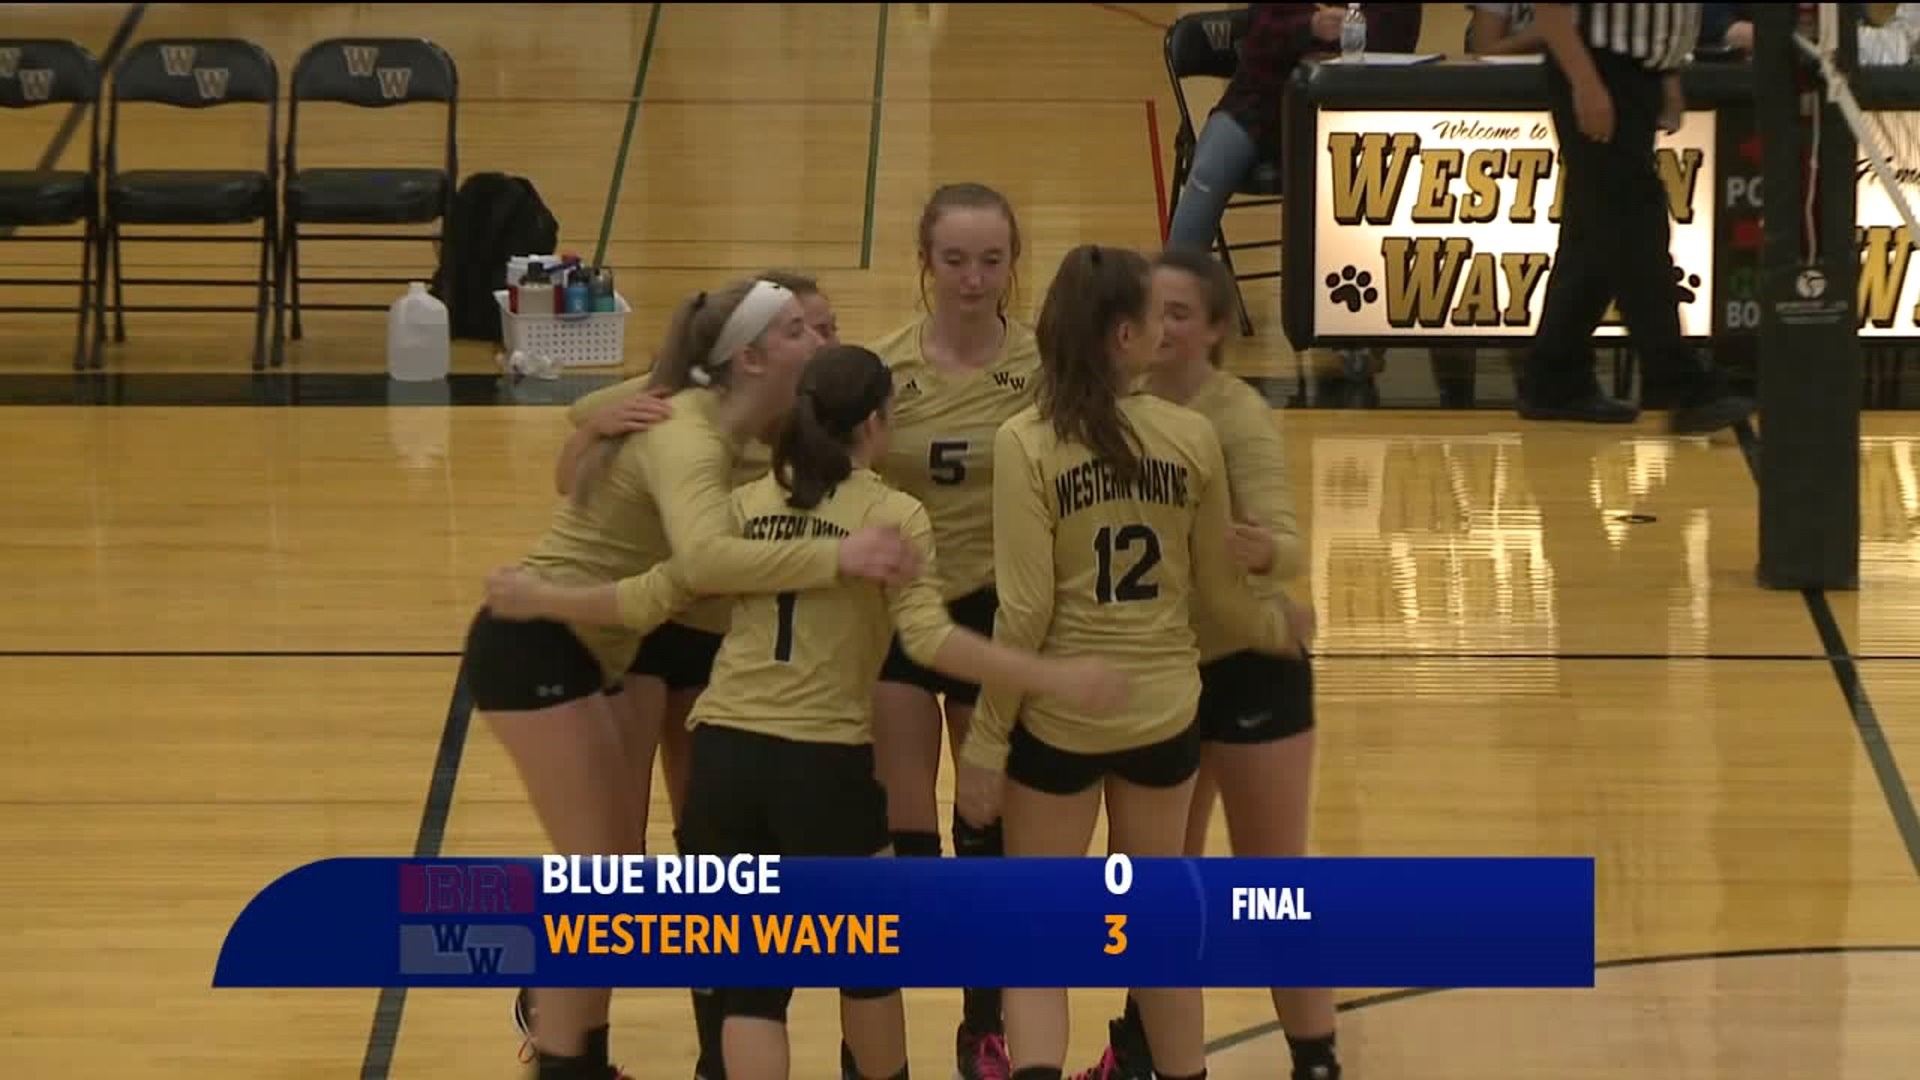 Western Wayne Sweeps Blue Ridge in Key Girls Volleyball Match